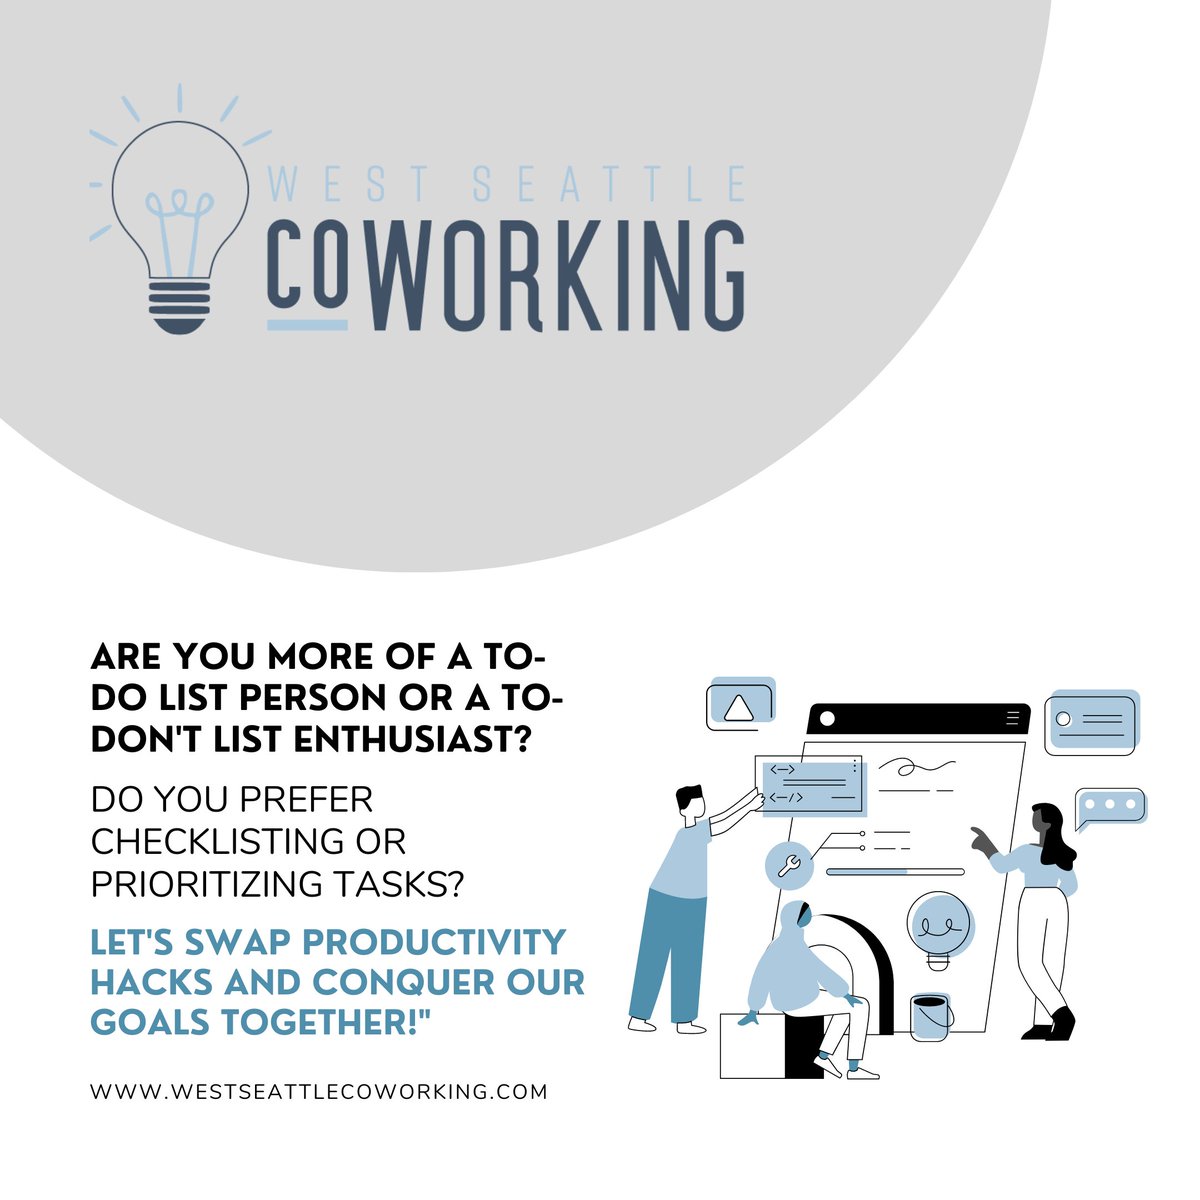 𝗟𝗲𝘁'𝘀 𝘀𝘄𝗮𝗽 𝗽𝗿𝗼𝗱𝘂𝗰𝘁𝗶𝘃𝗶𝘁𝘆 𝗵𝗮𝗰𝗸𝘀 𝗮𝗻𝗱 𝗰𝗼𝗻𝗾𝘂𝗲𝗿 𝗼𝘂𝗿 𝗴𝗼𝗮𝗹𝘀 𝘁𝗼𝗴𝗲𝘁𝗵𝗲𝗿!  
-
#coworking #coworkinglife #CoworkingSpace #westseattle #westseattlelife #workfromhome #todolist #todolists #productivityhacks